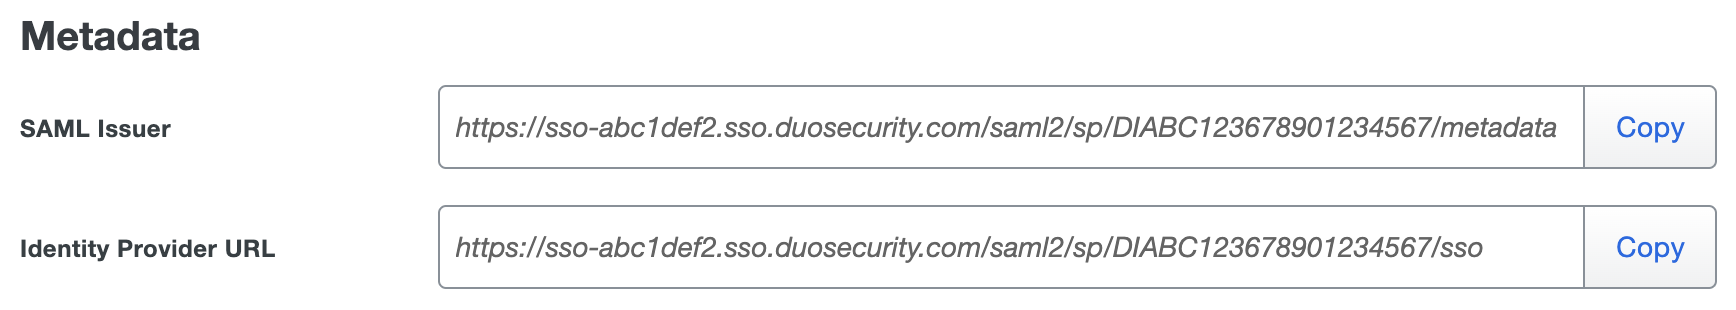 Duo SolarWinds Service Desk SAML Issuer and IdP URLs